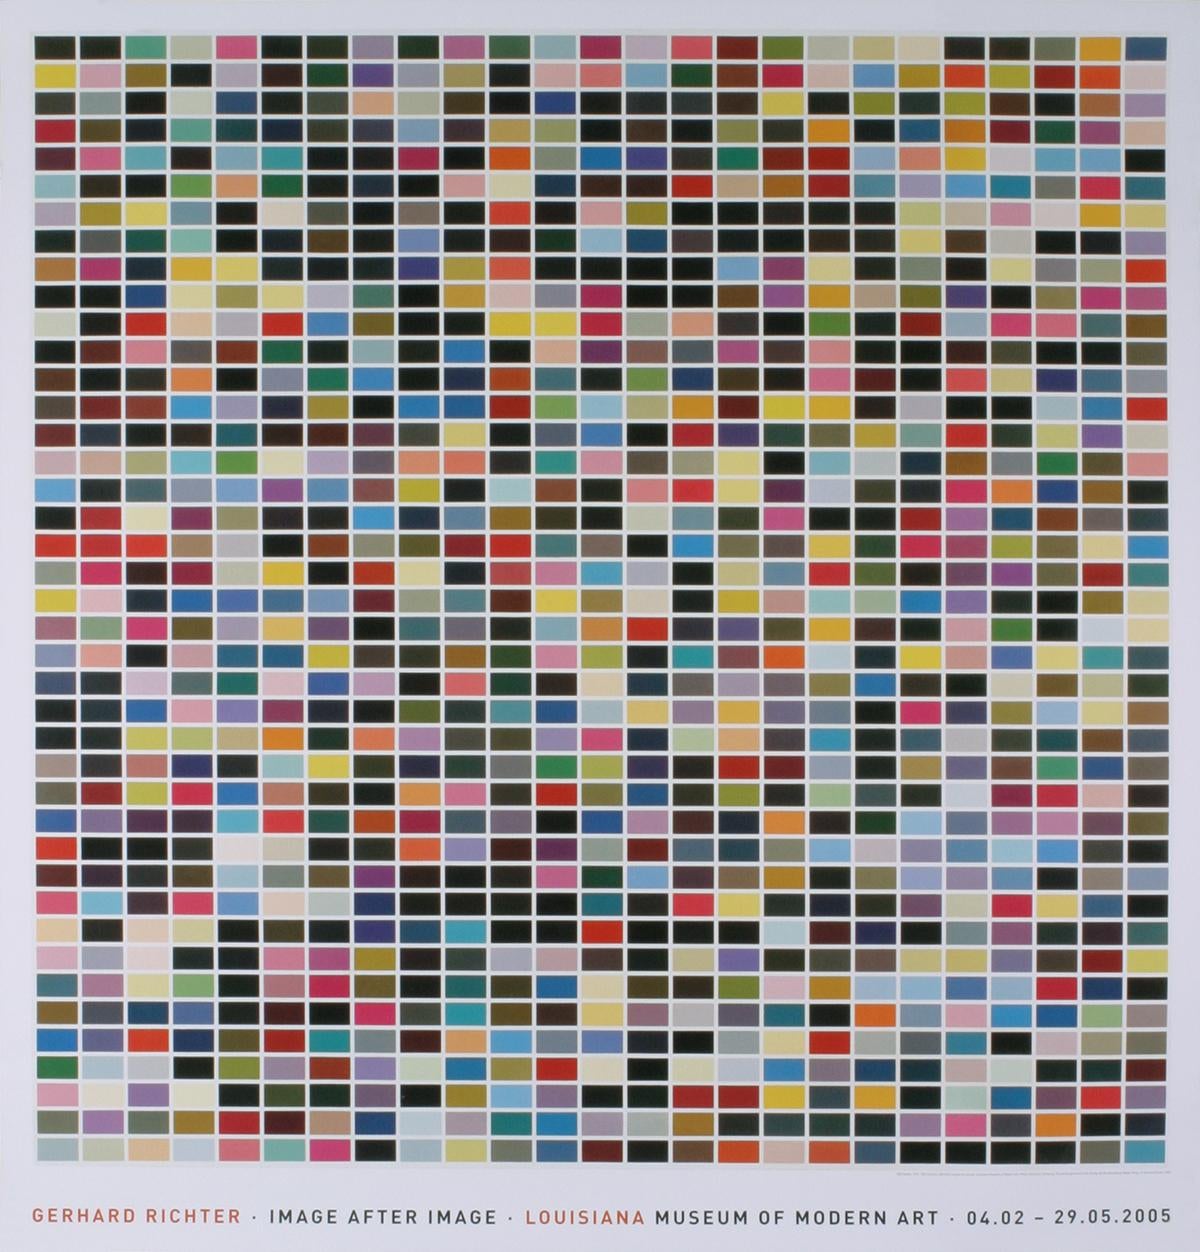 Gerhard Richter, 1025 Colors (1025 Farben) Official Museum Poster, 2013